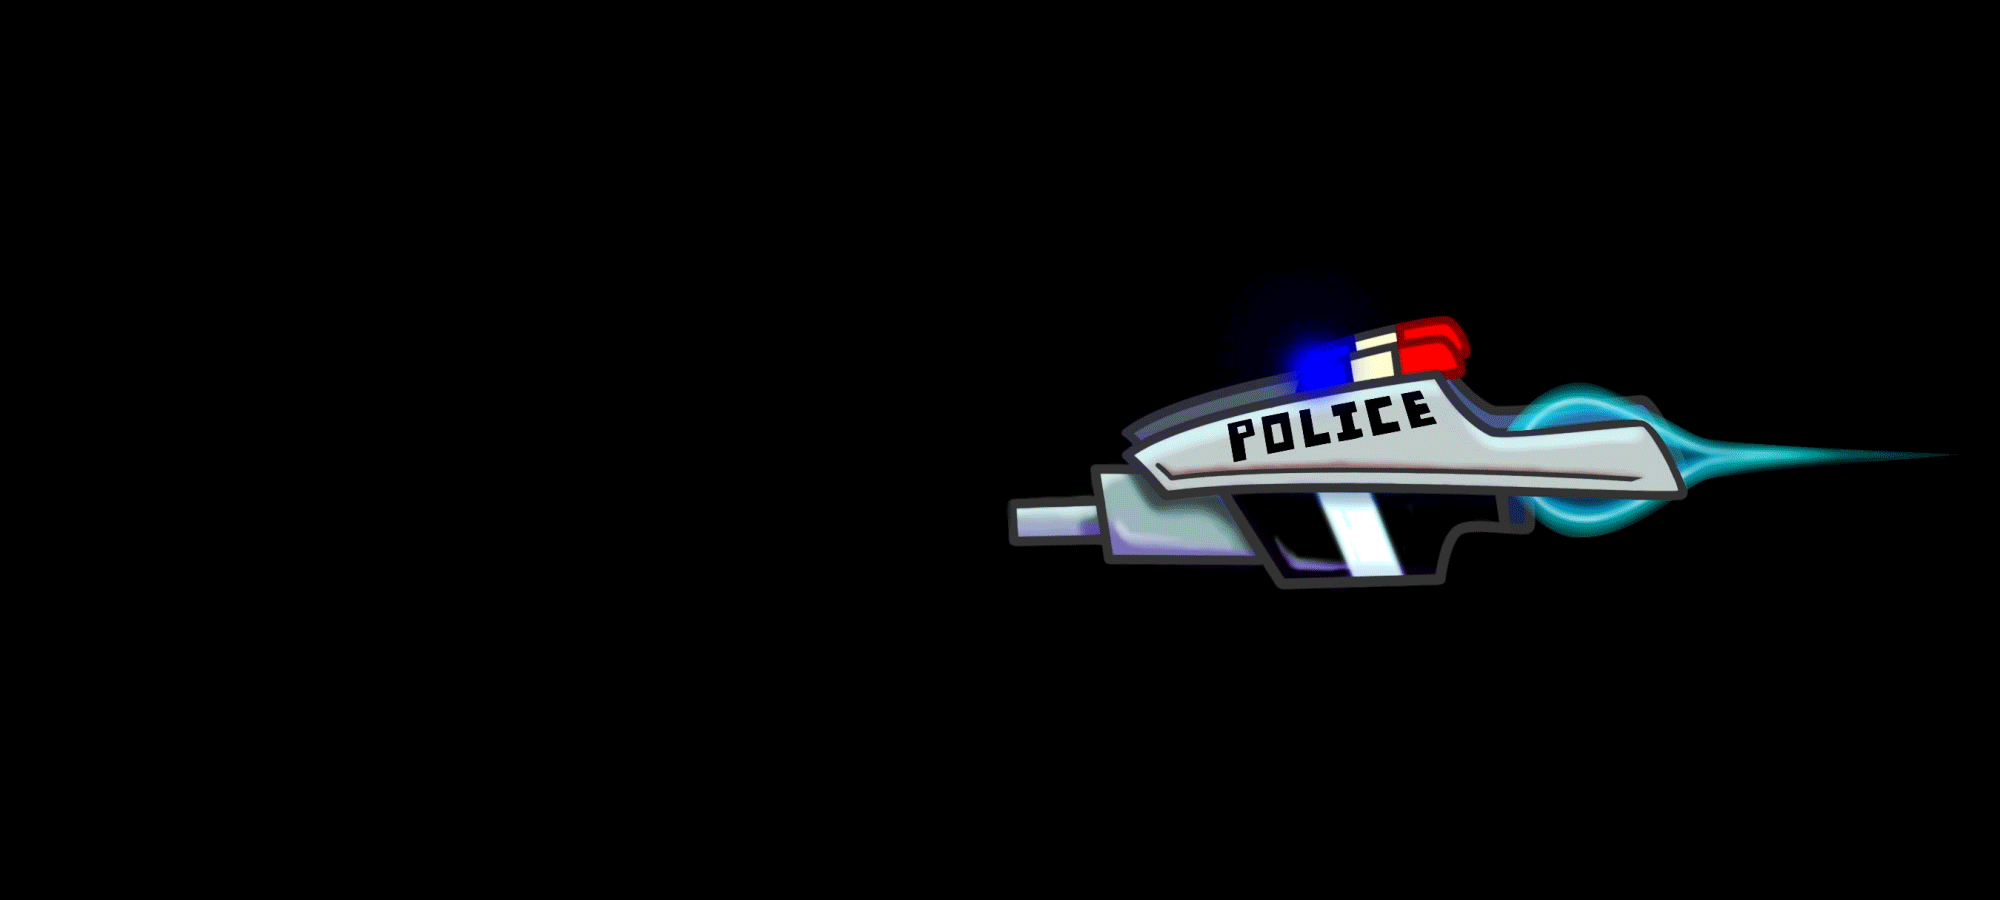 police-car-16